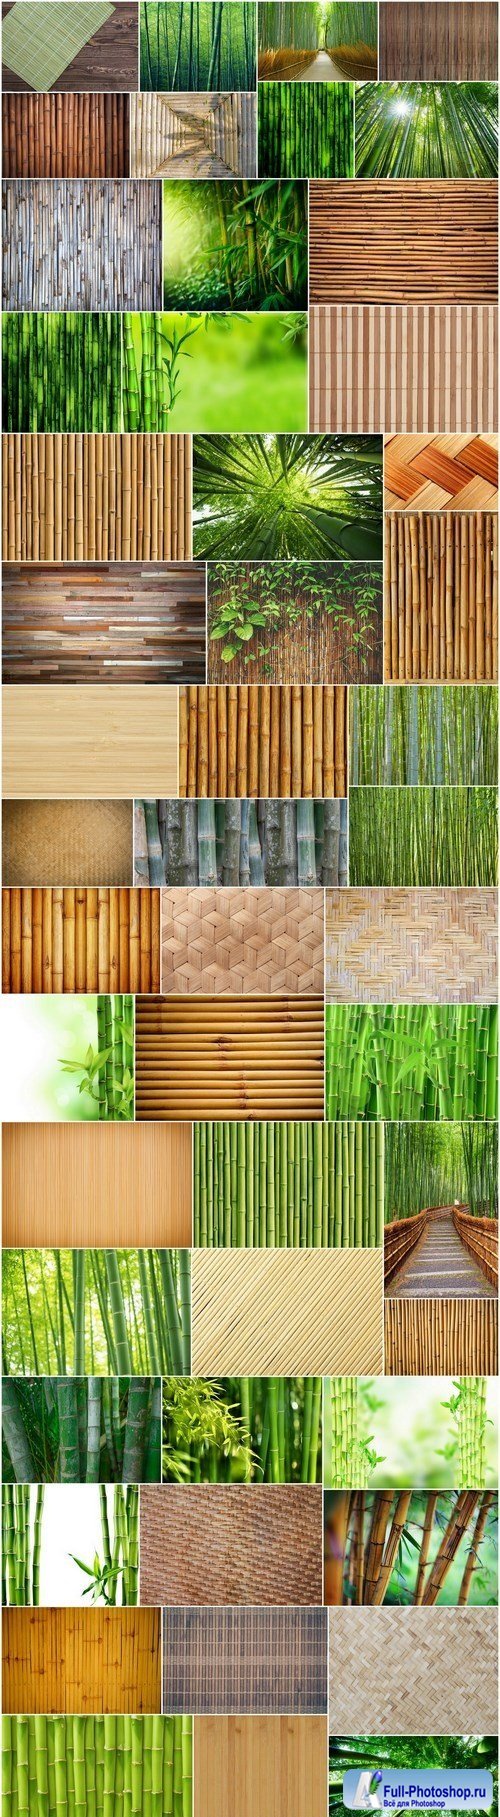 Bamboo Collection - 50xUHQ JPEG